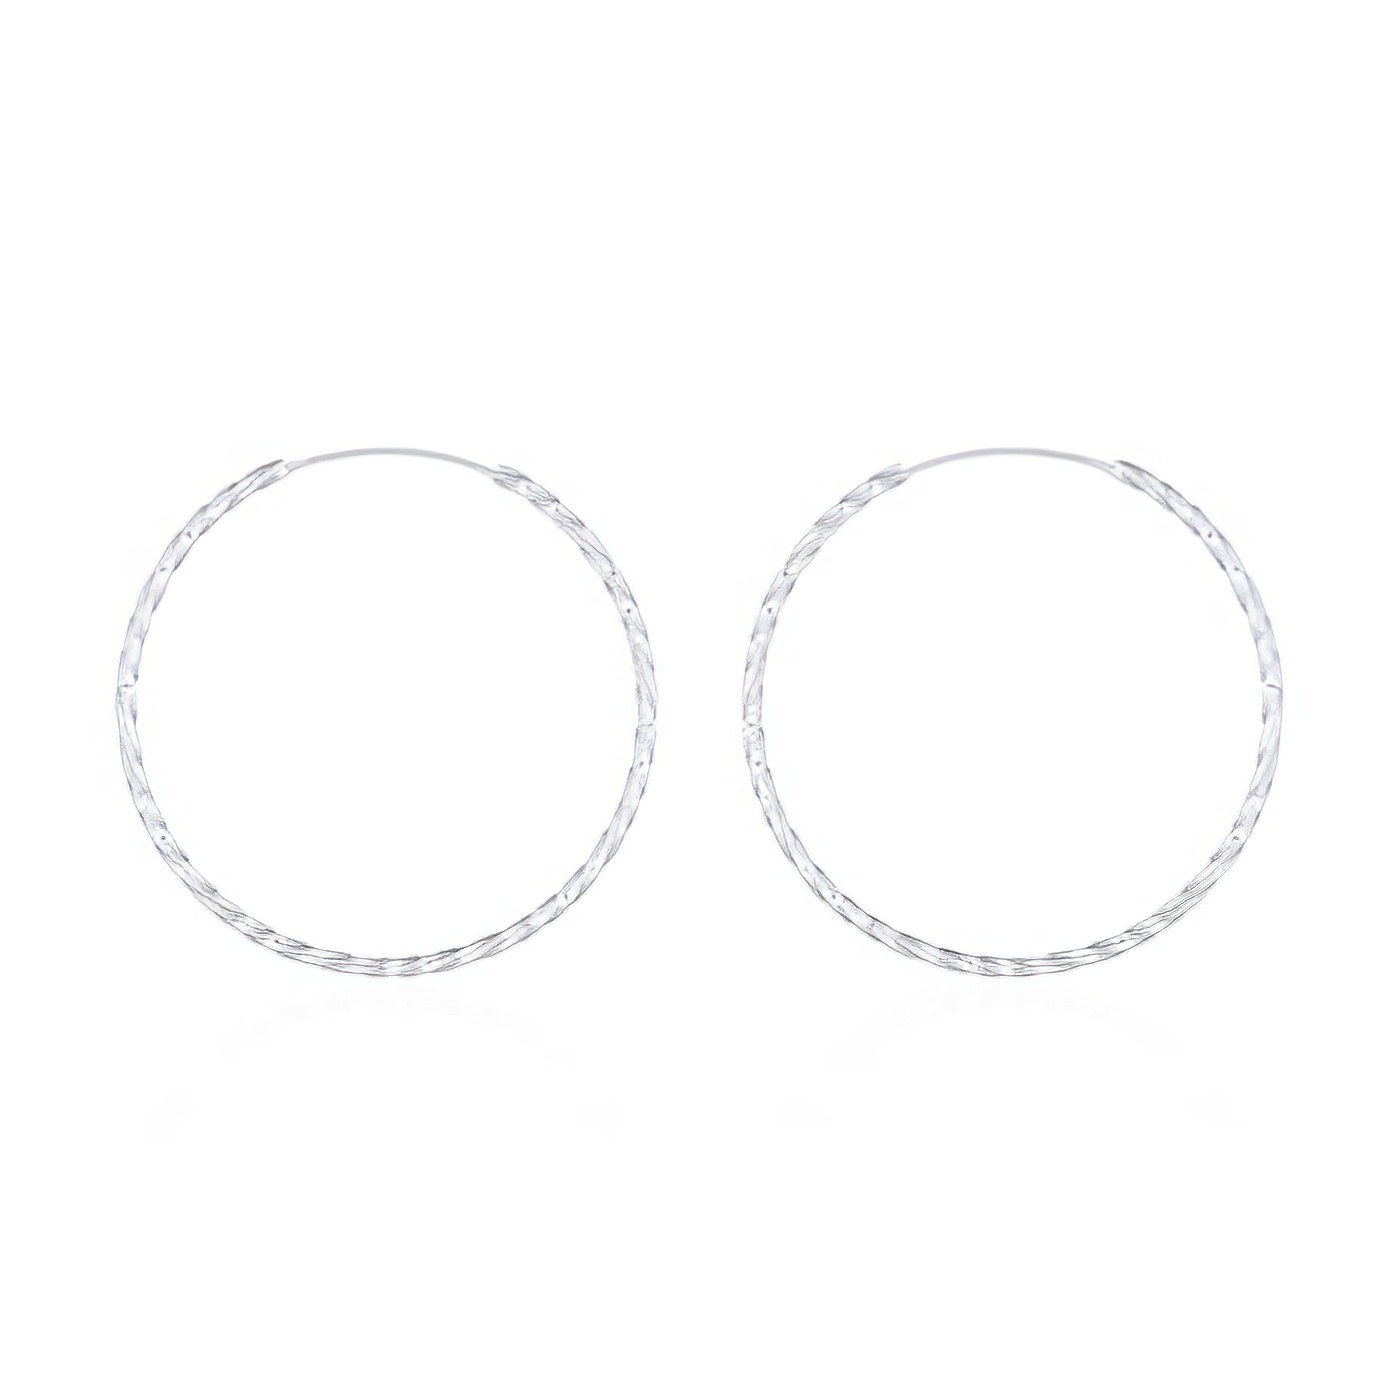 50 mm Sterling Twisted Silver Wire Hoop Earrings by BeYindi 